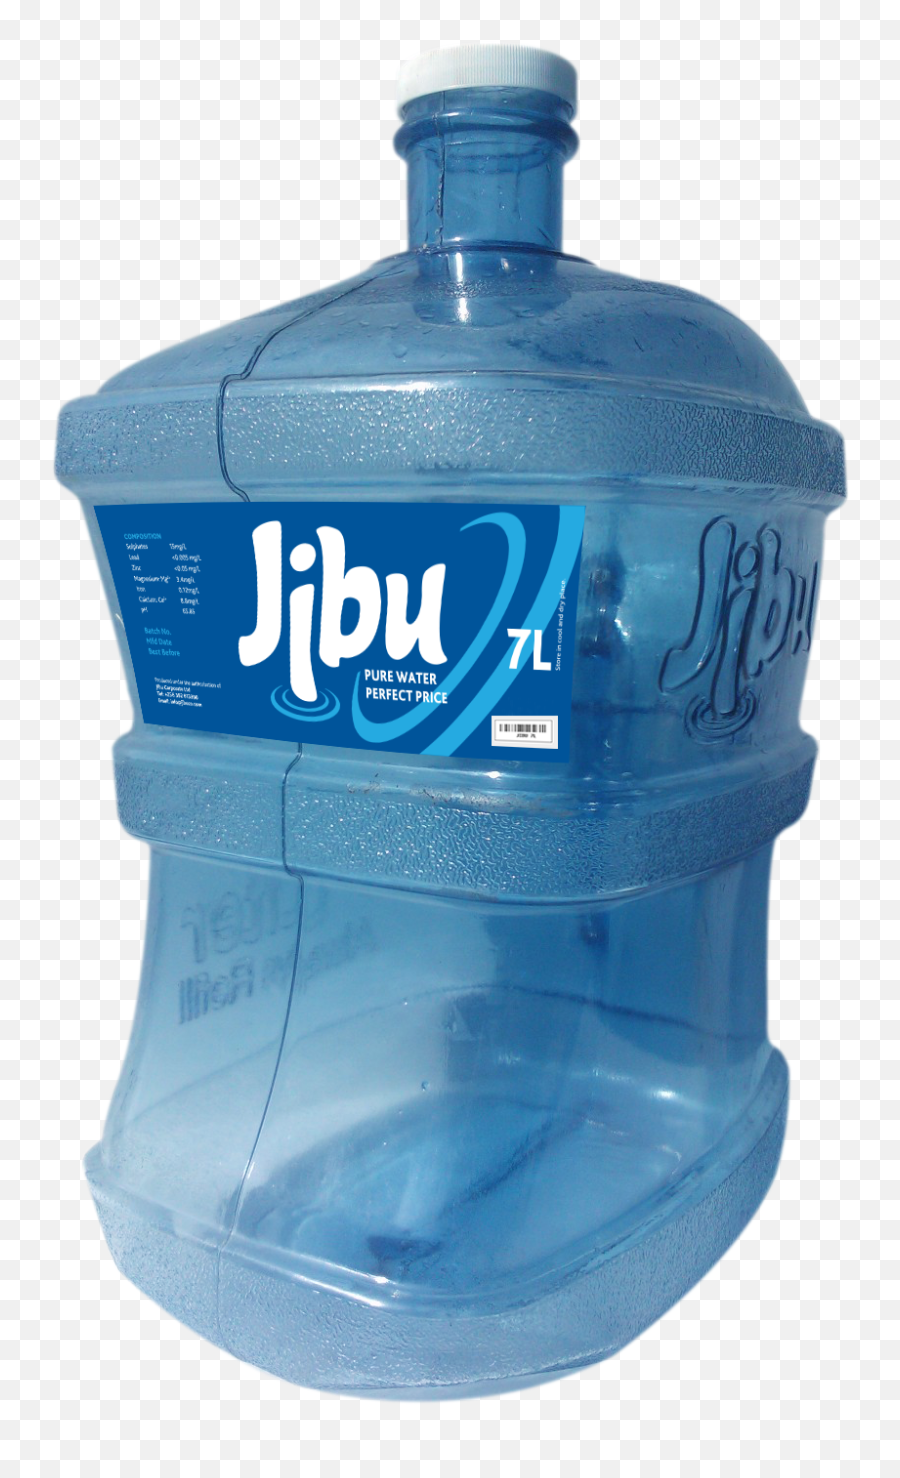 7l - Water Bottle Png,Water Bottle Transparent Background